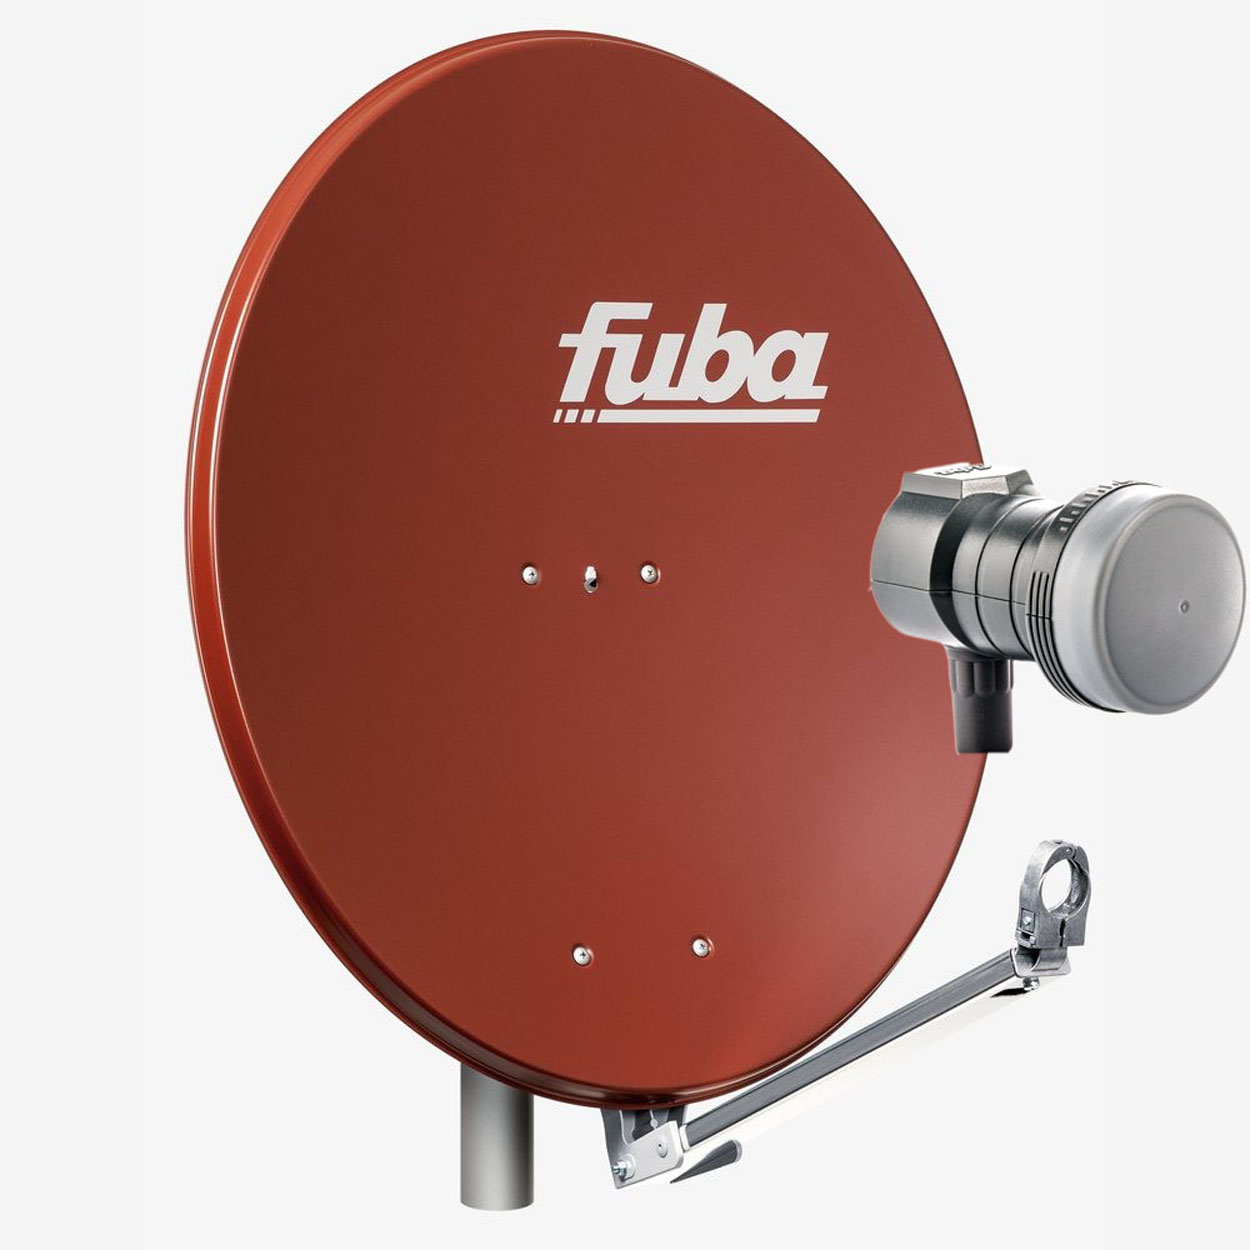 FUBA Single Sat Antenne Anlage Teilnehmer Sat Schüssel Single DEK Anlage LNB) R 801 117 Spiegel 1 cm, (80 DAL